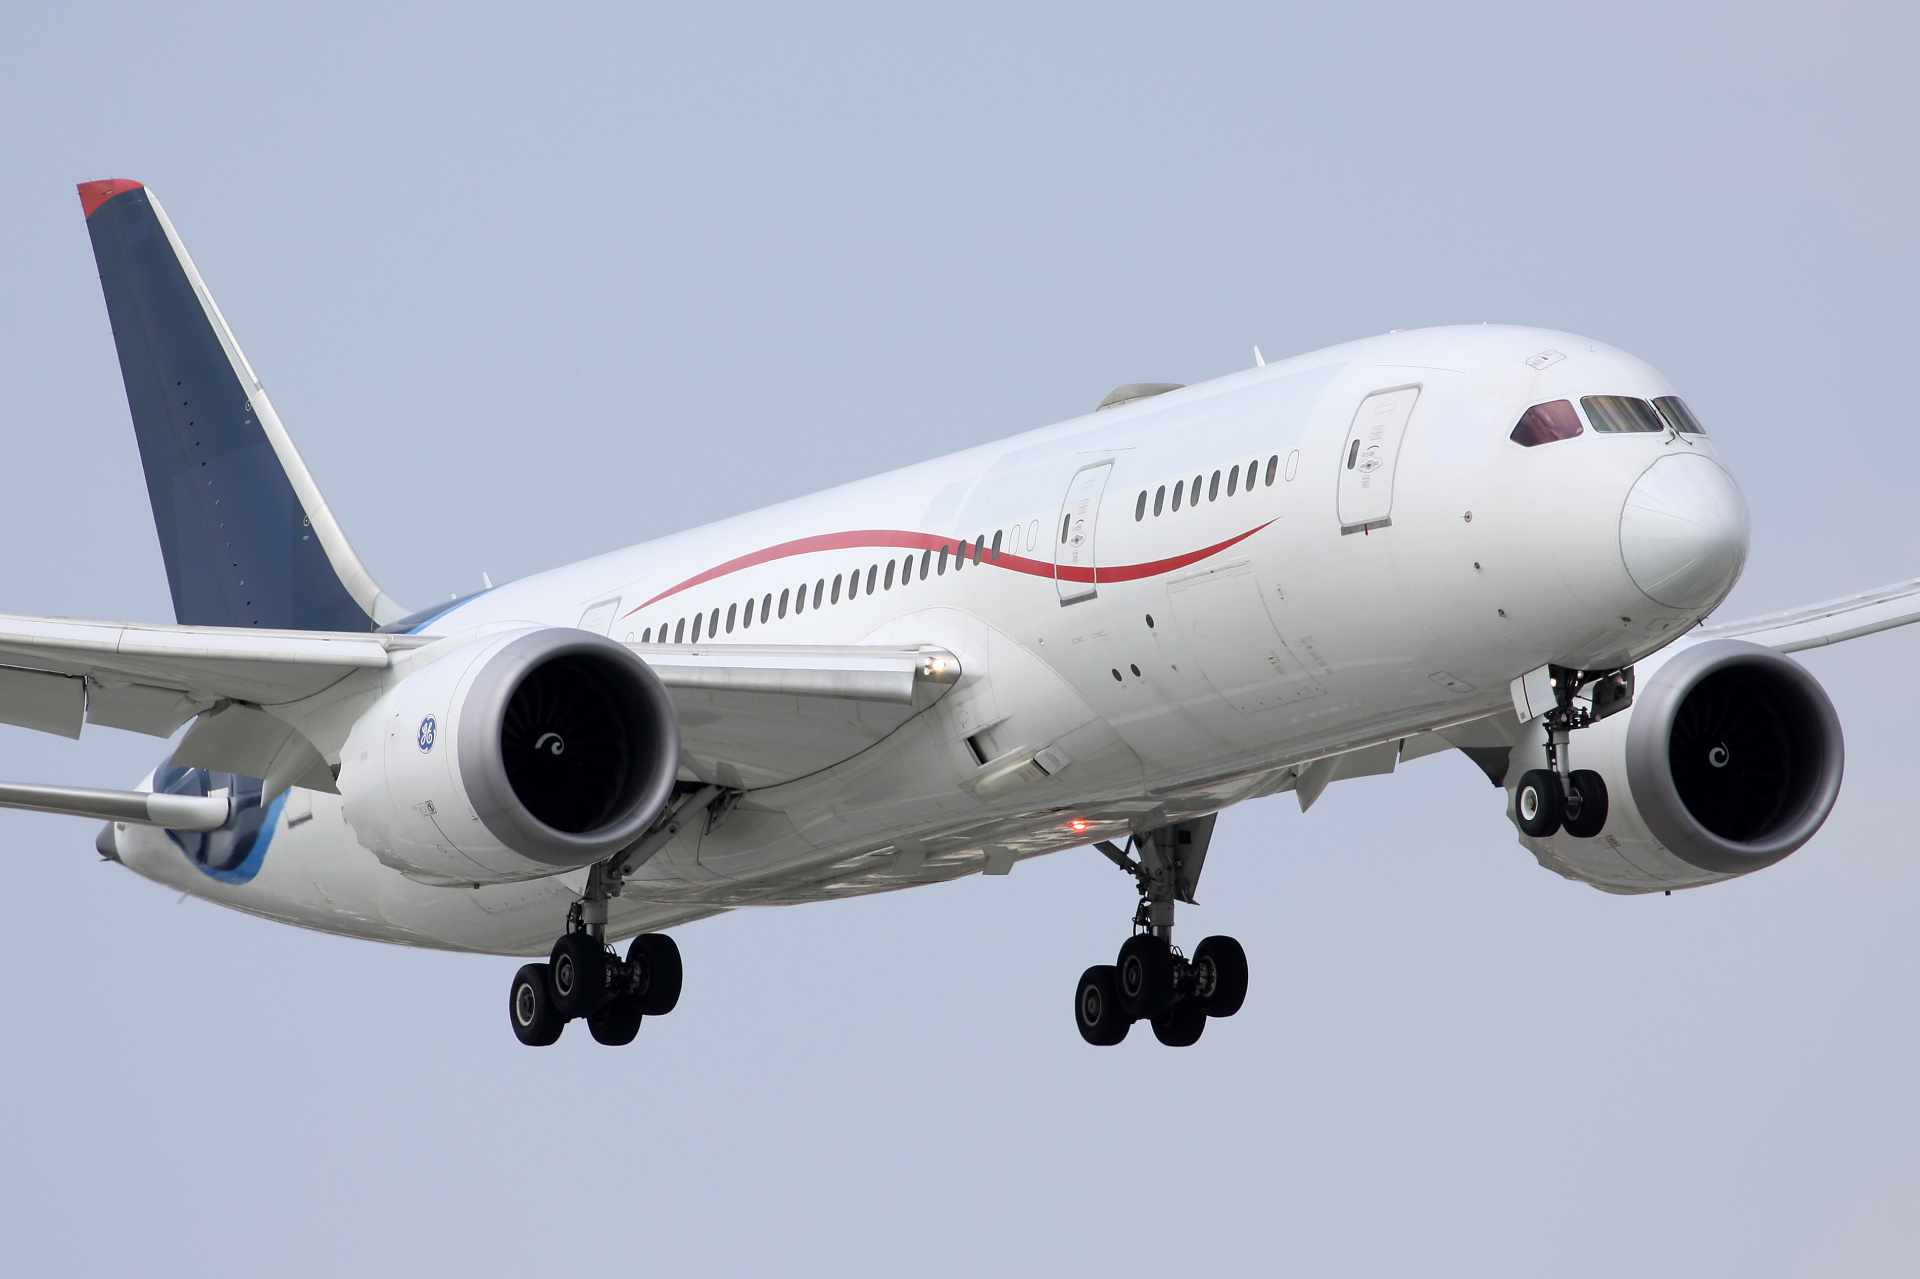 P4-787 (Samoloty » Spotting na EPWA » Boeing 787-8 Dreamliner » Comlux Aruba)